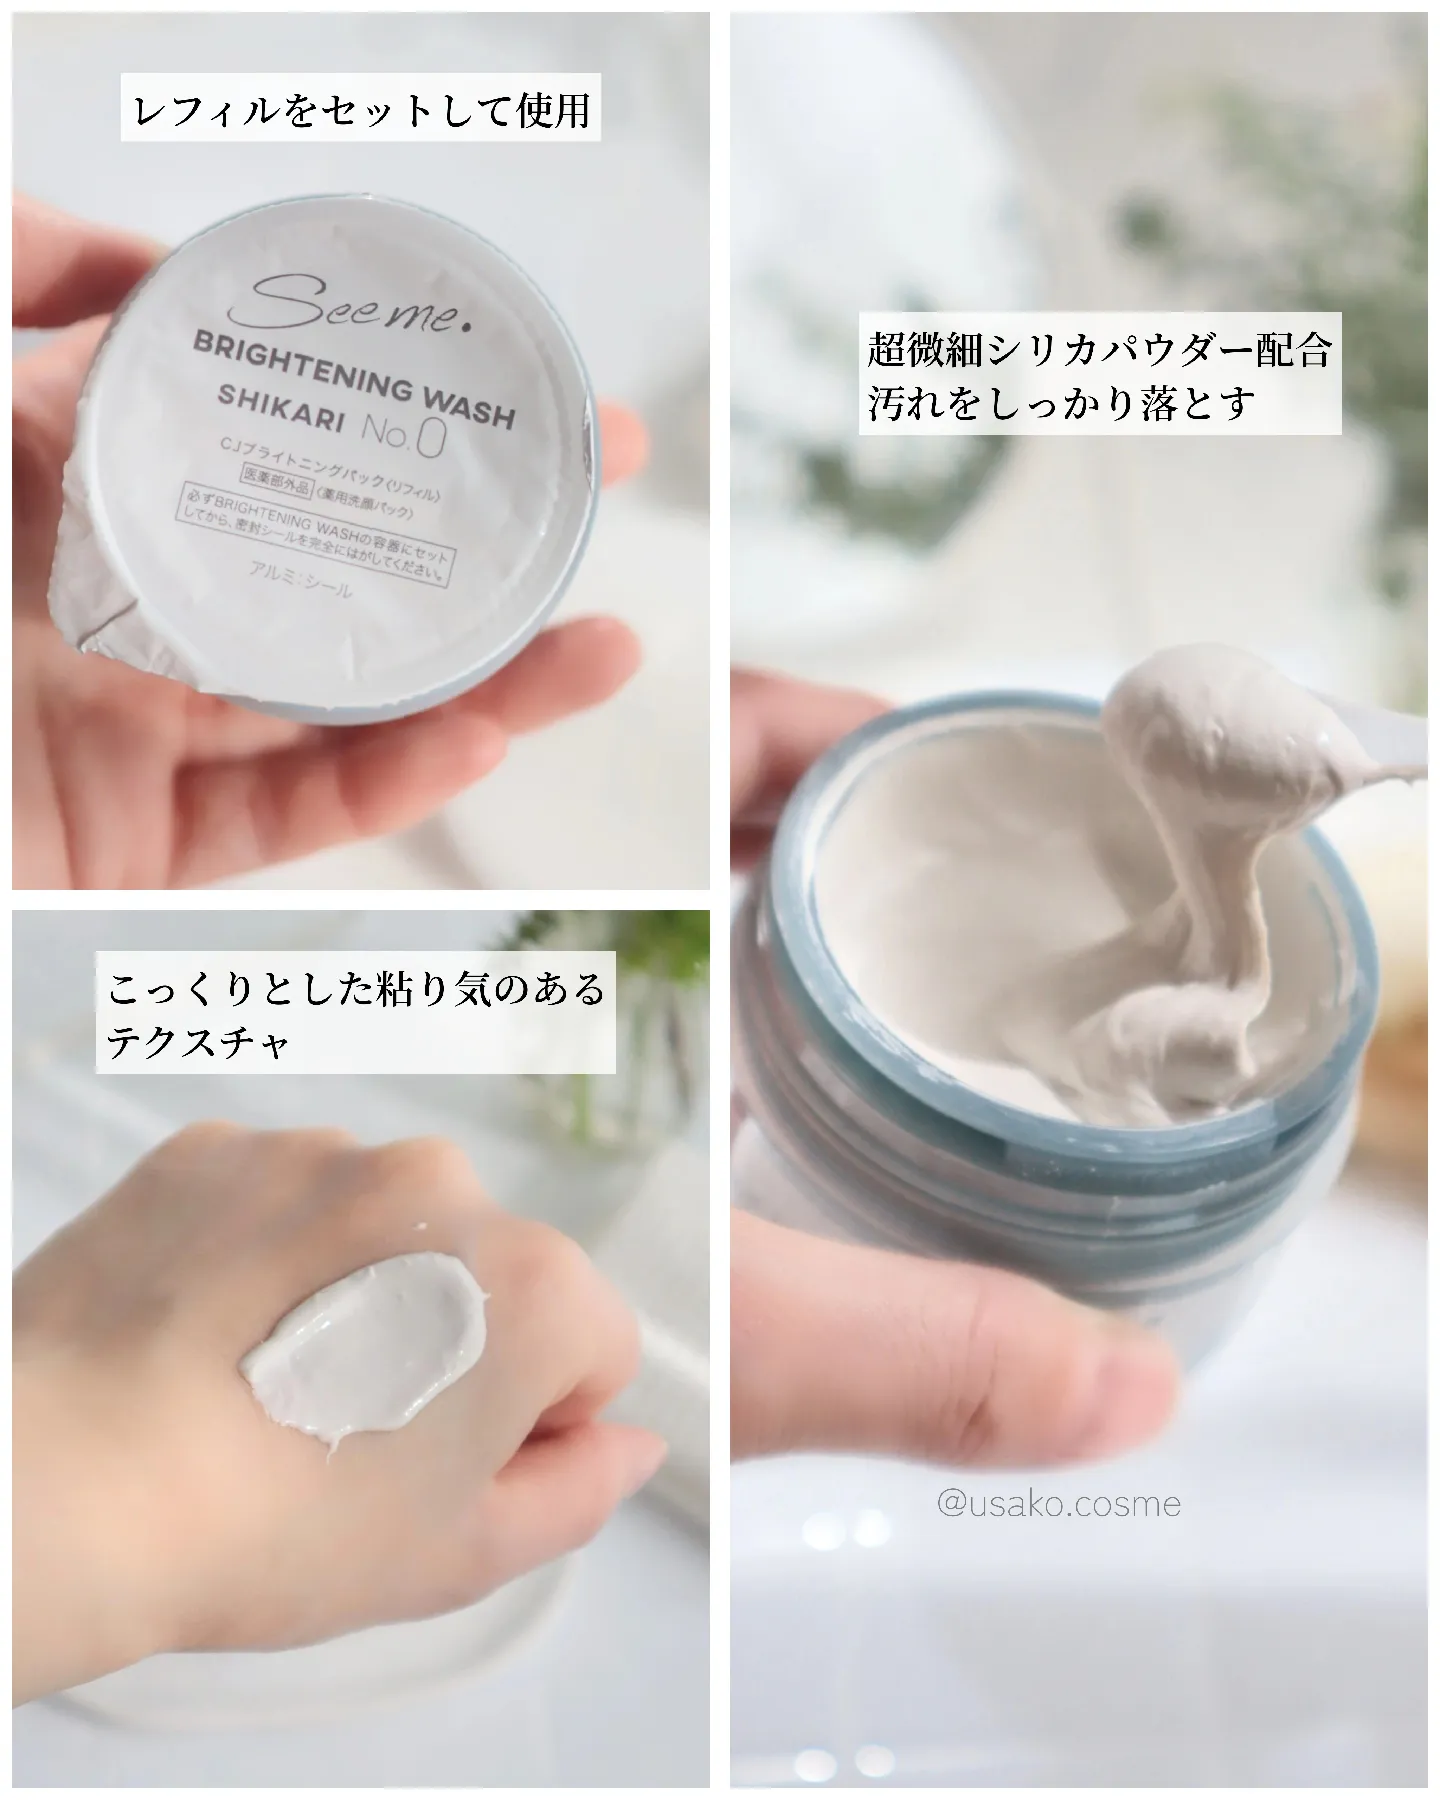 Shikari 洗顔フォーム セット - 洗顔料